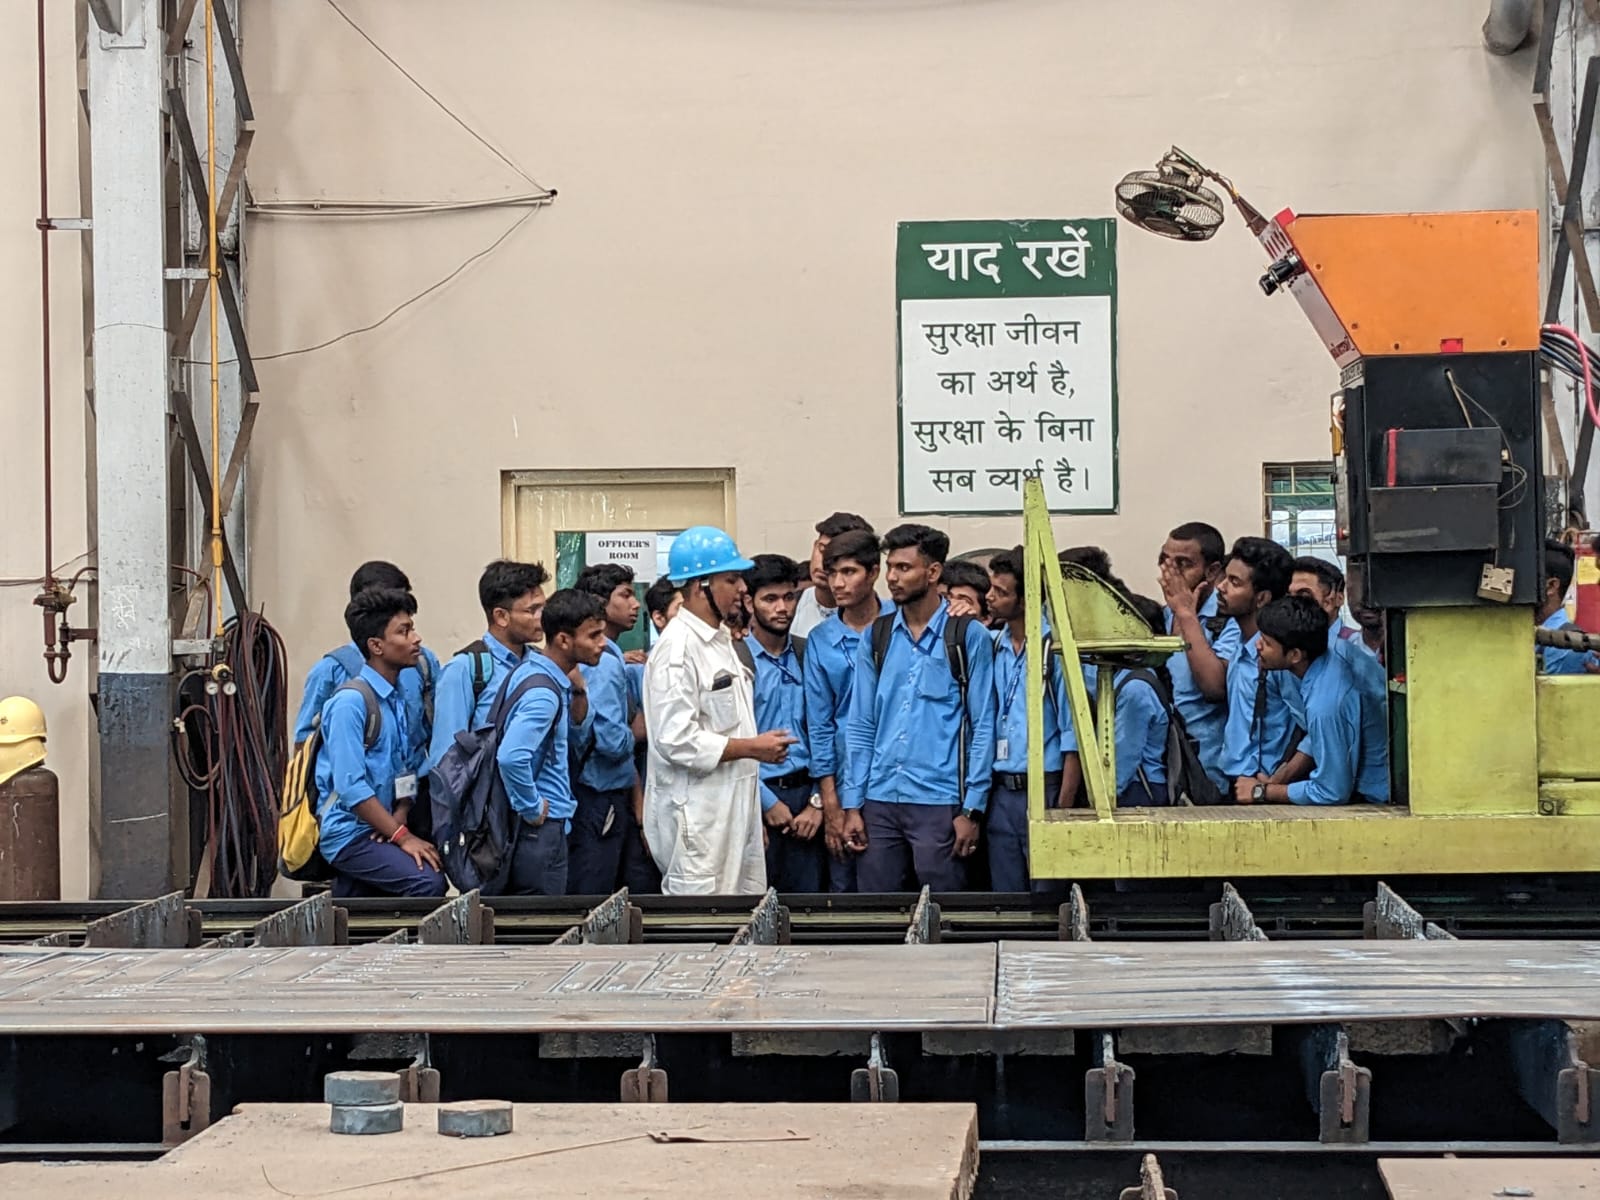 Image 1 - Industrial Visit - Visit of trainees from Tollygunje Govt. ITI, Kolkata on 28 Mar 23